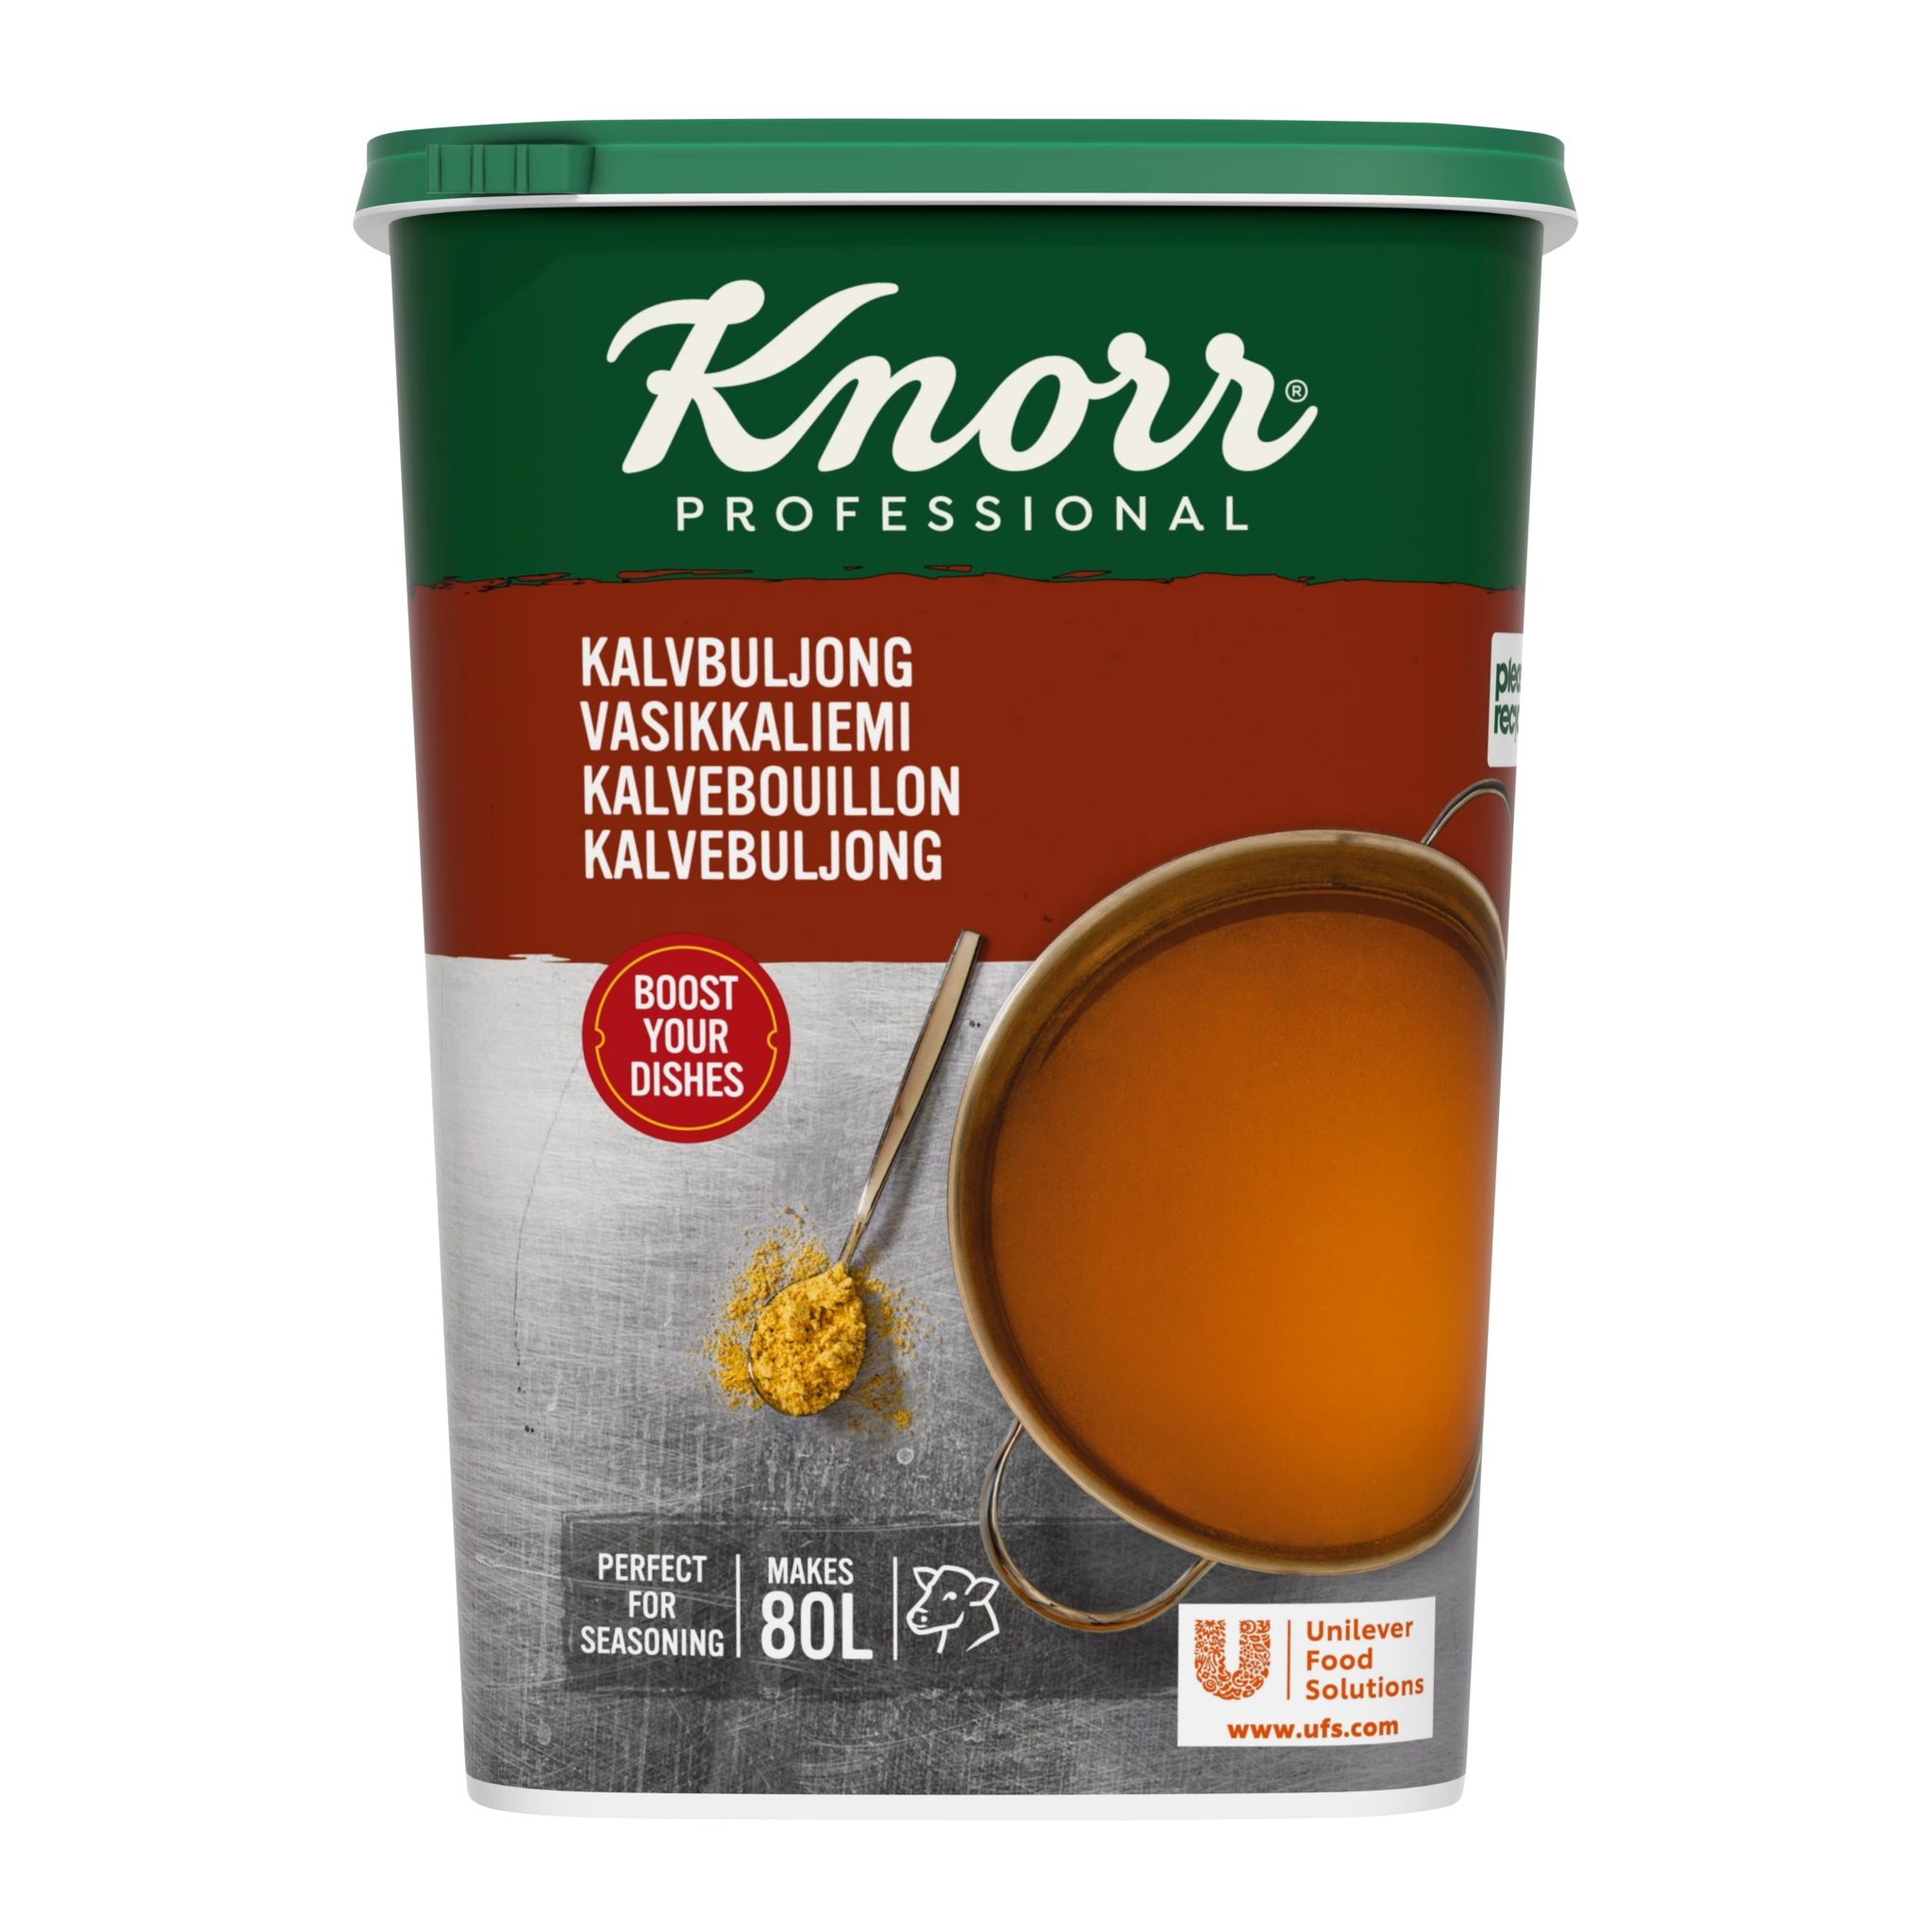 Knorr Kálfakraftur Þurr 1,2kg/80L (3)